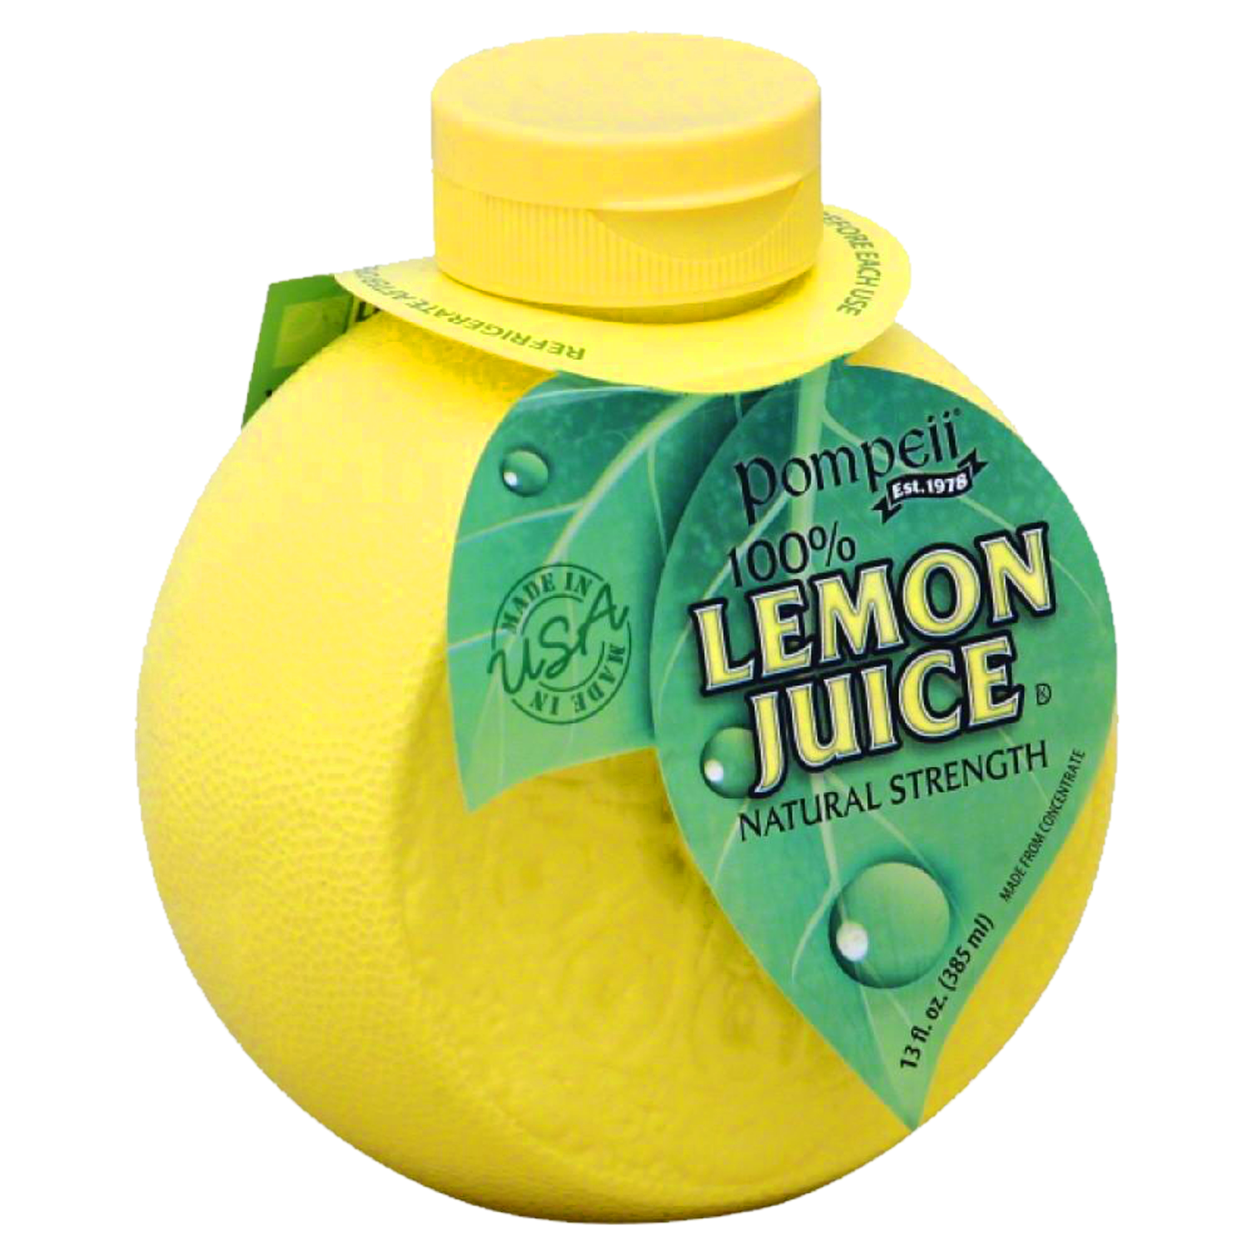 A Yellow Bottle Of Lemon Juice